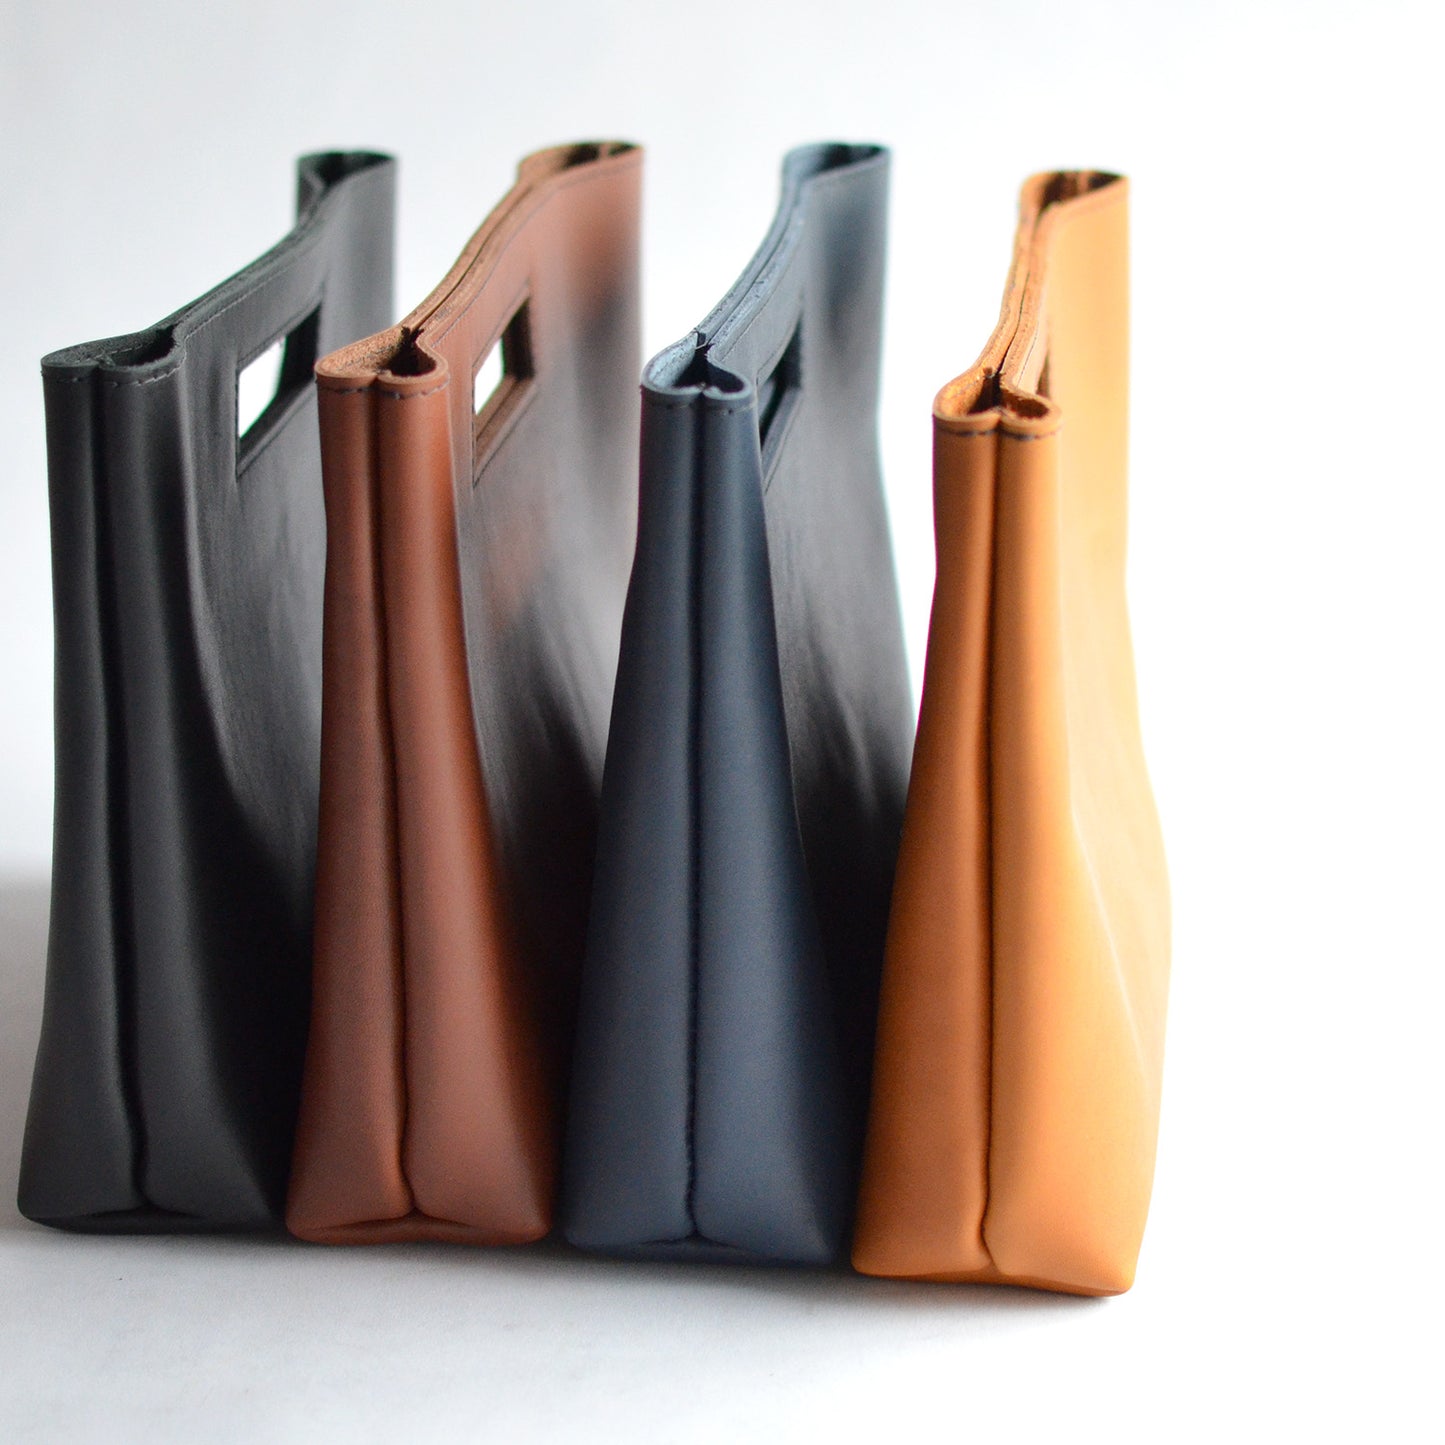 PENELOPE Handbag - Brown Leather